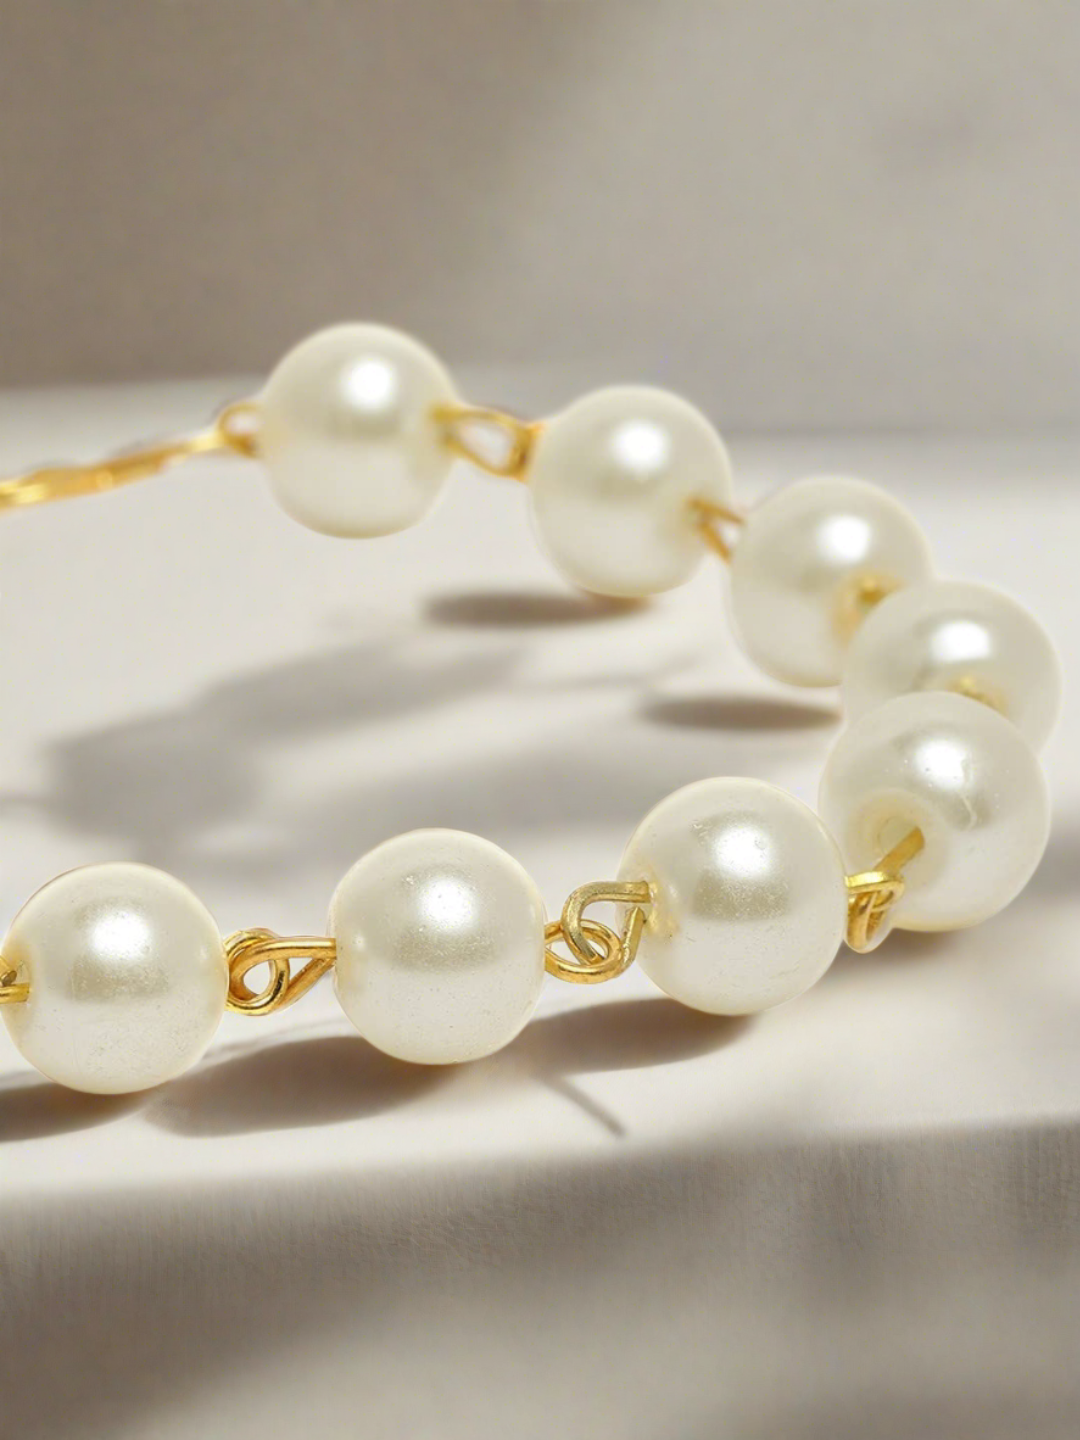 Torals Elegance: The Pearl Perfection Bracelet